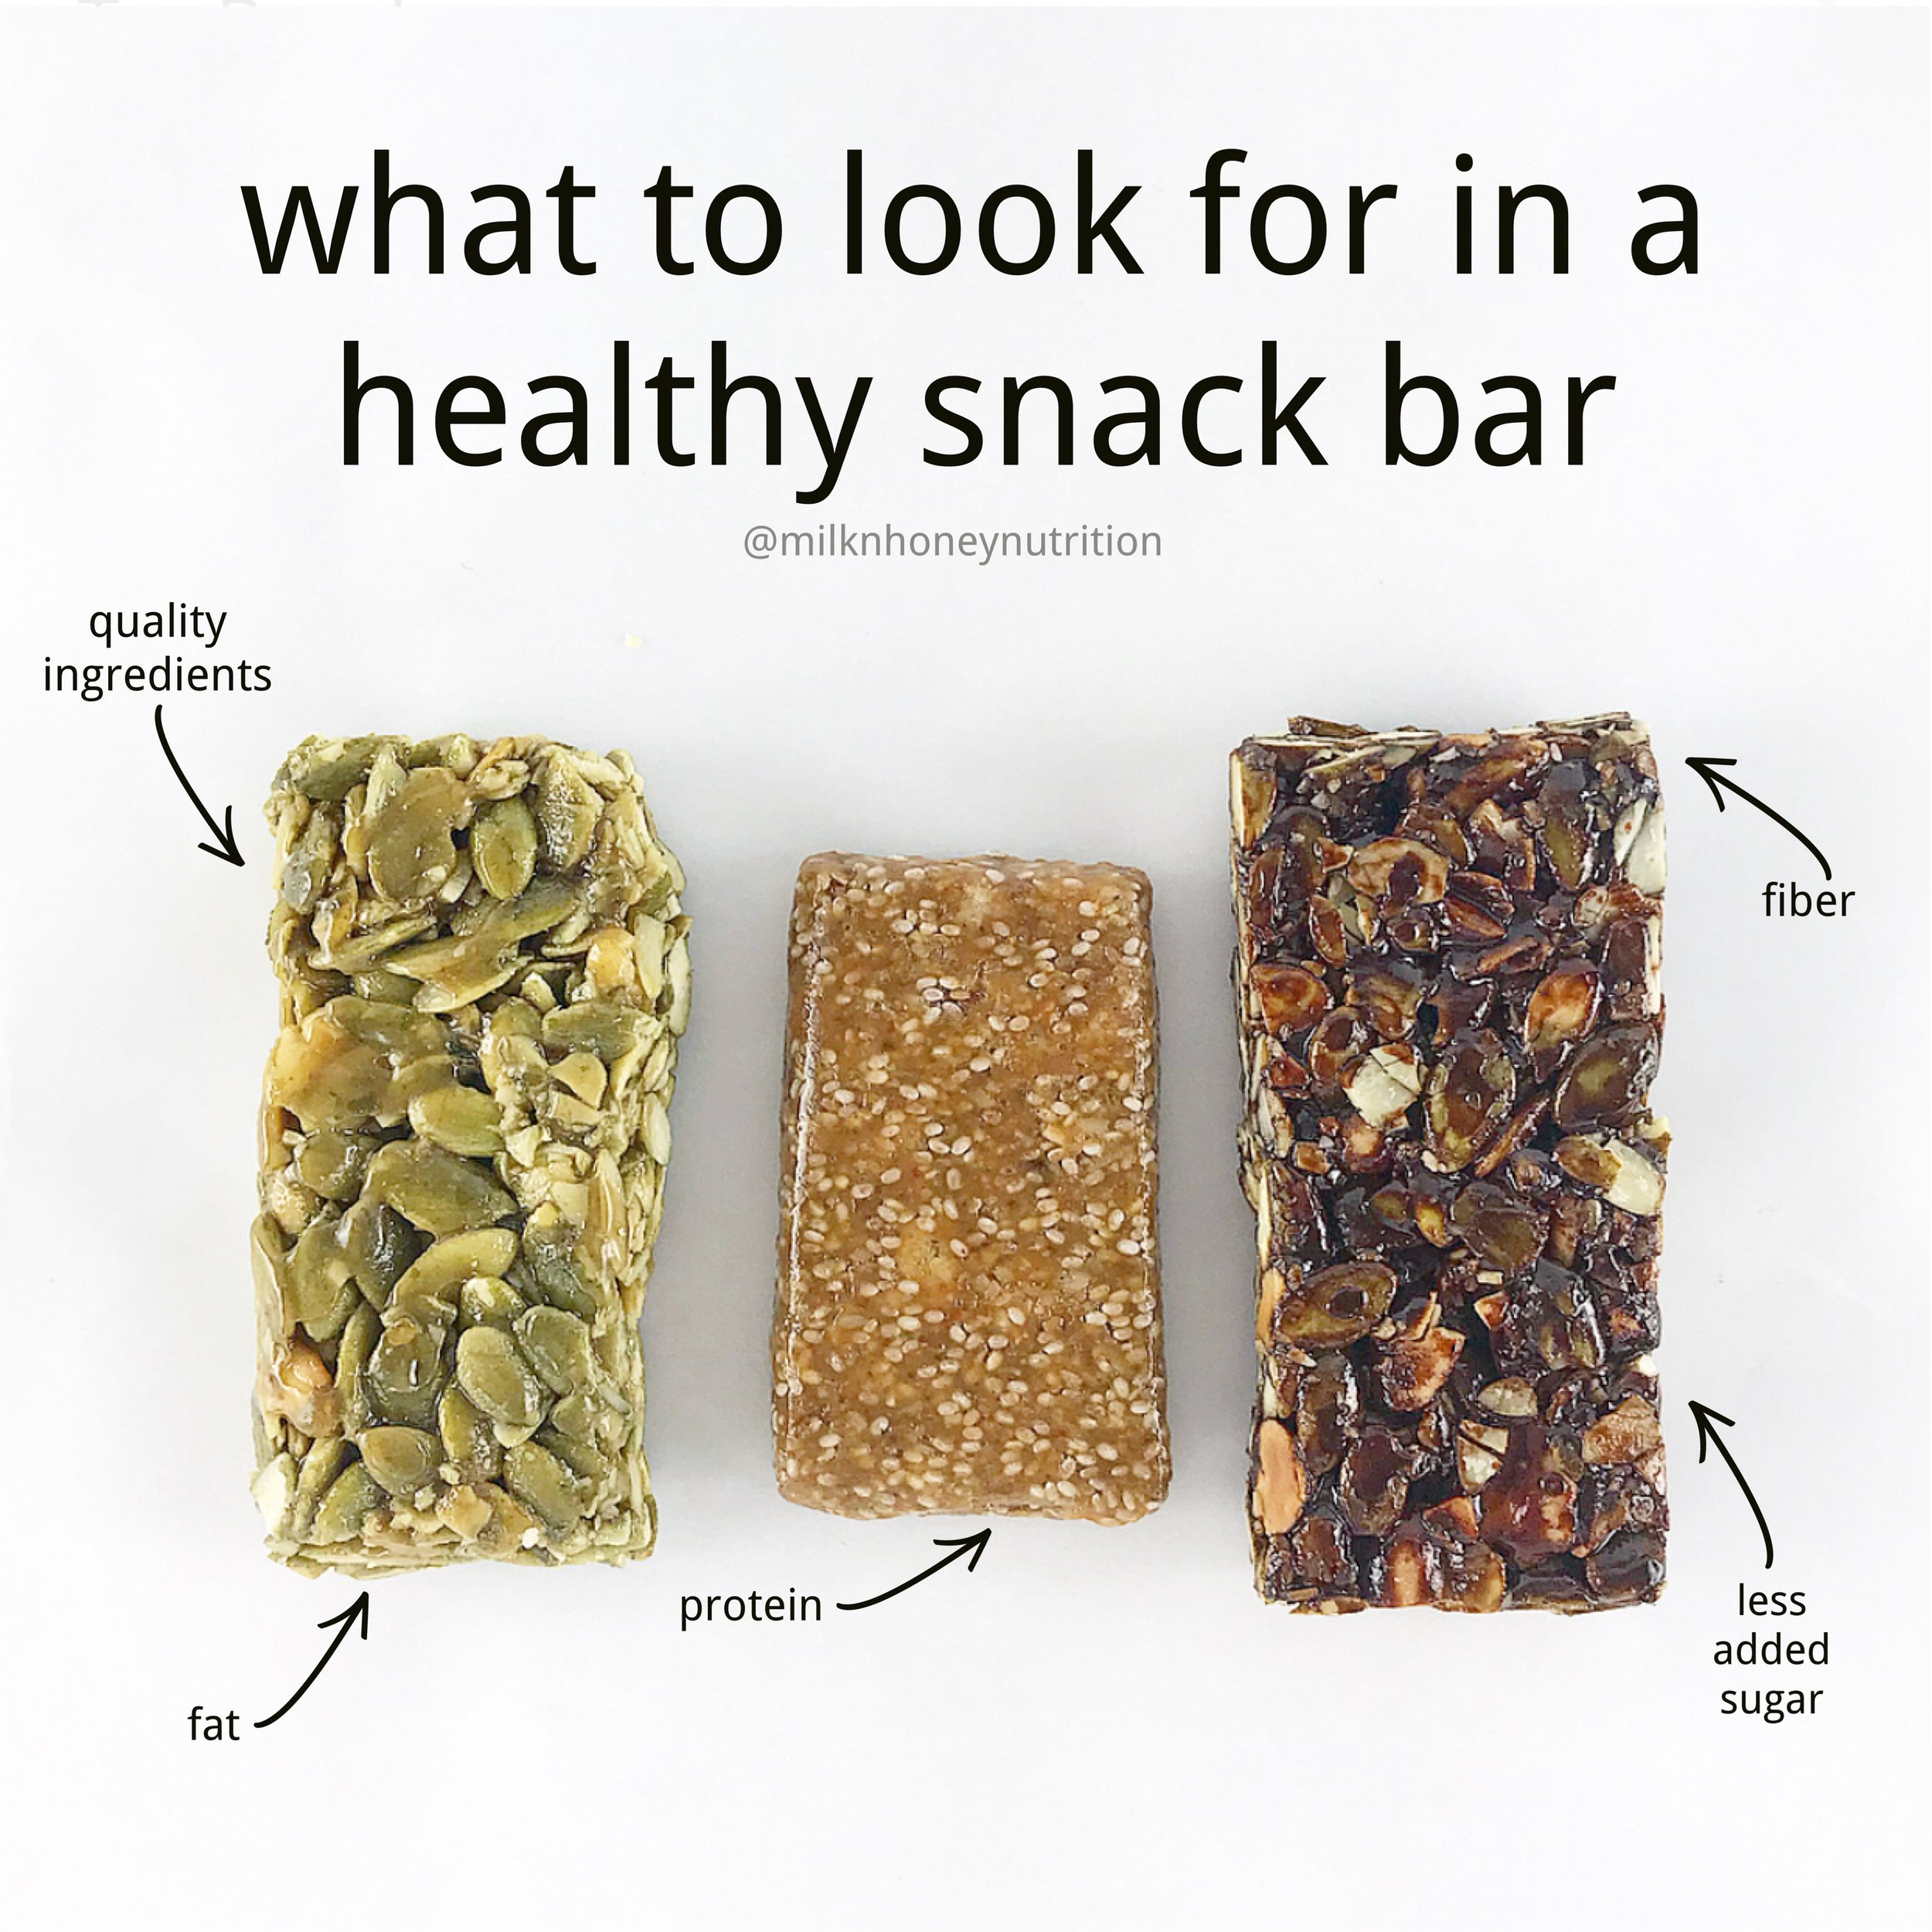 healthiest snack bar options